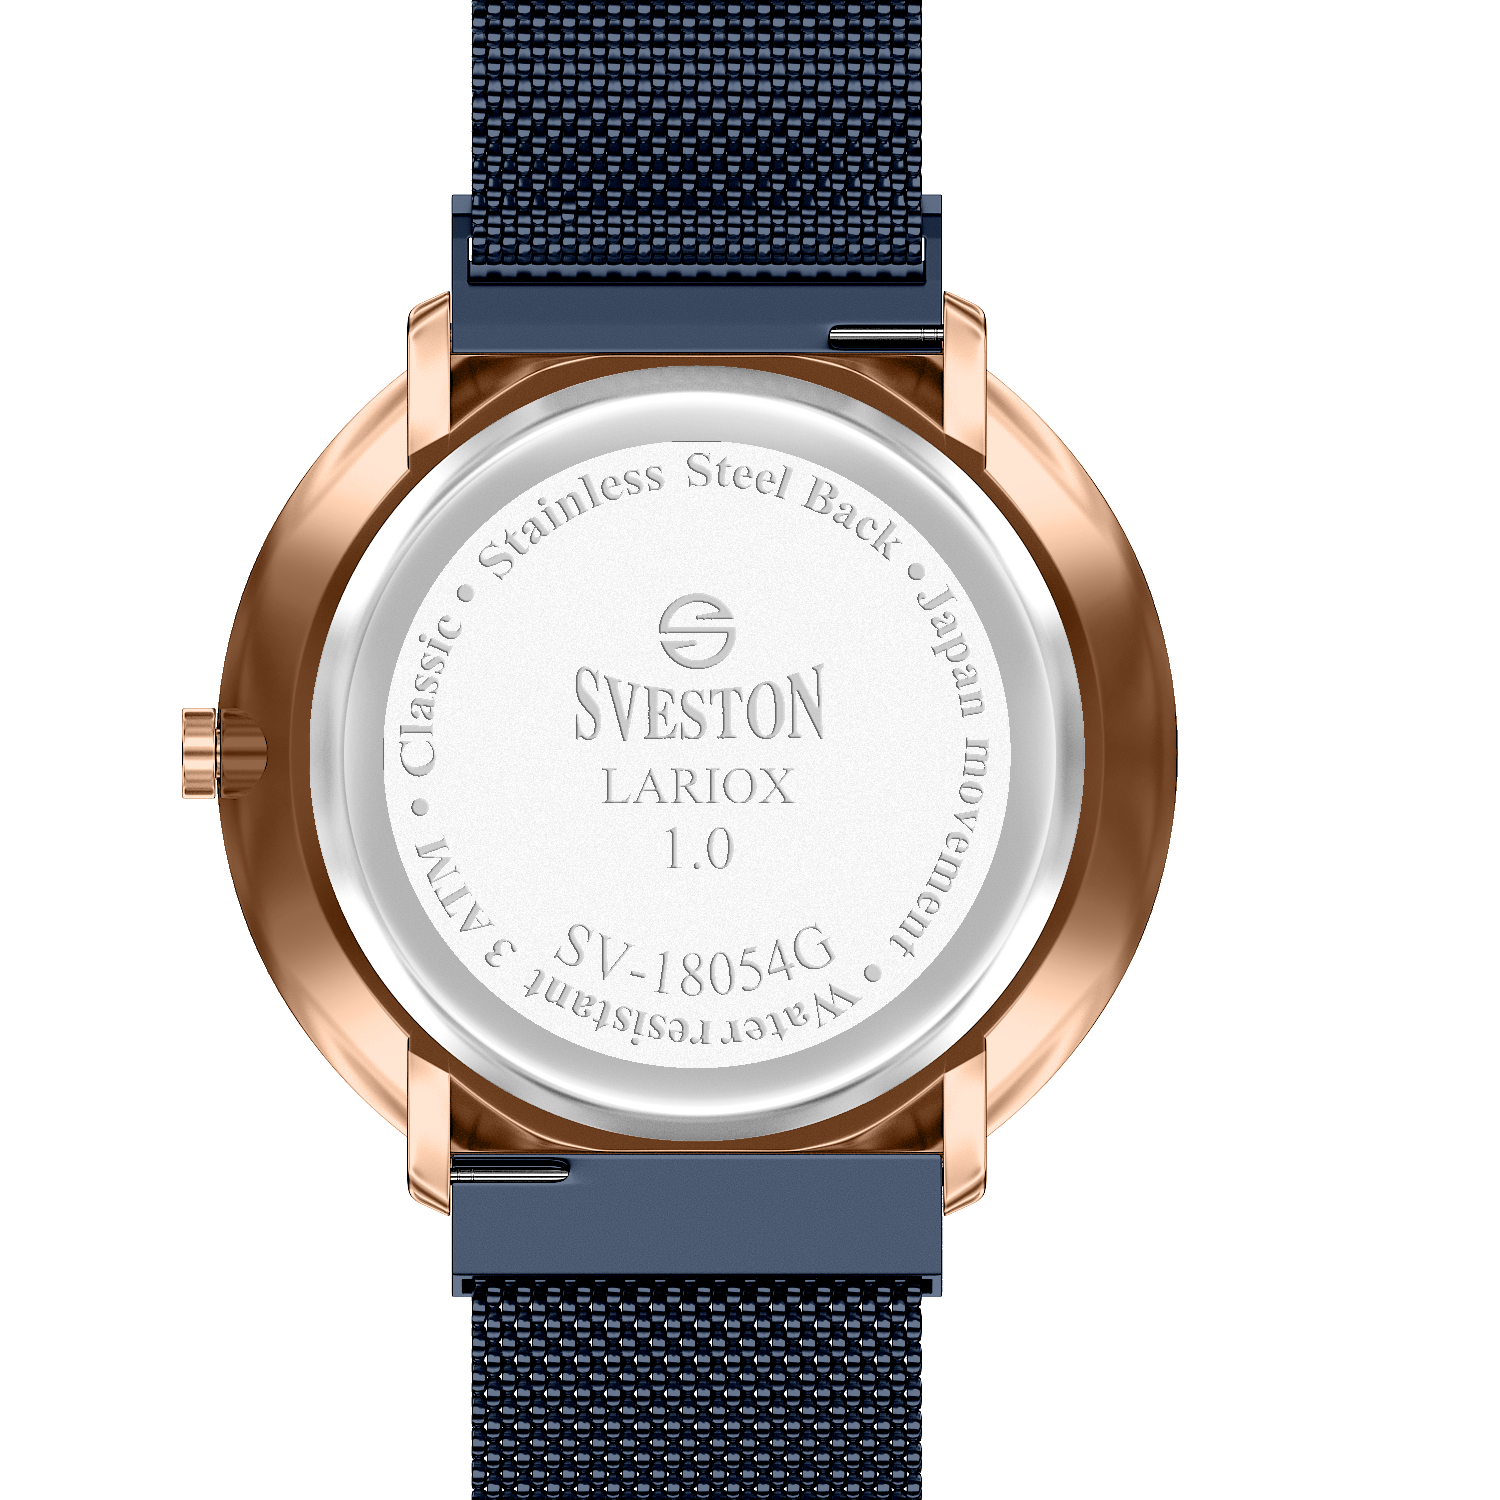 Sveston Lariox SV-18054 | Limited Edition